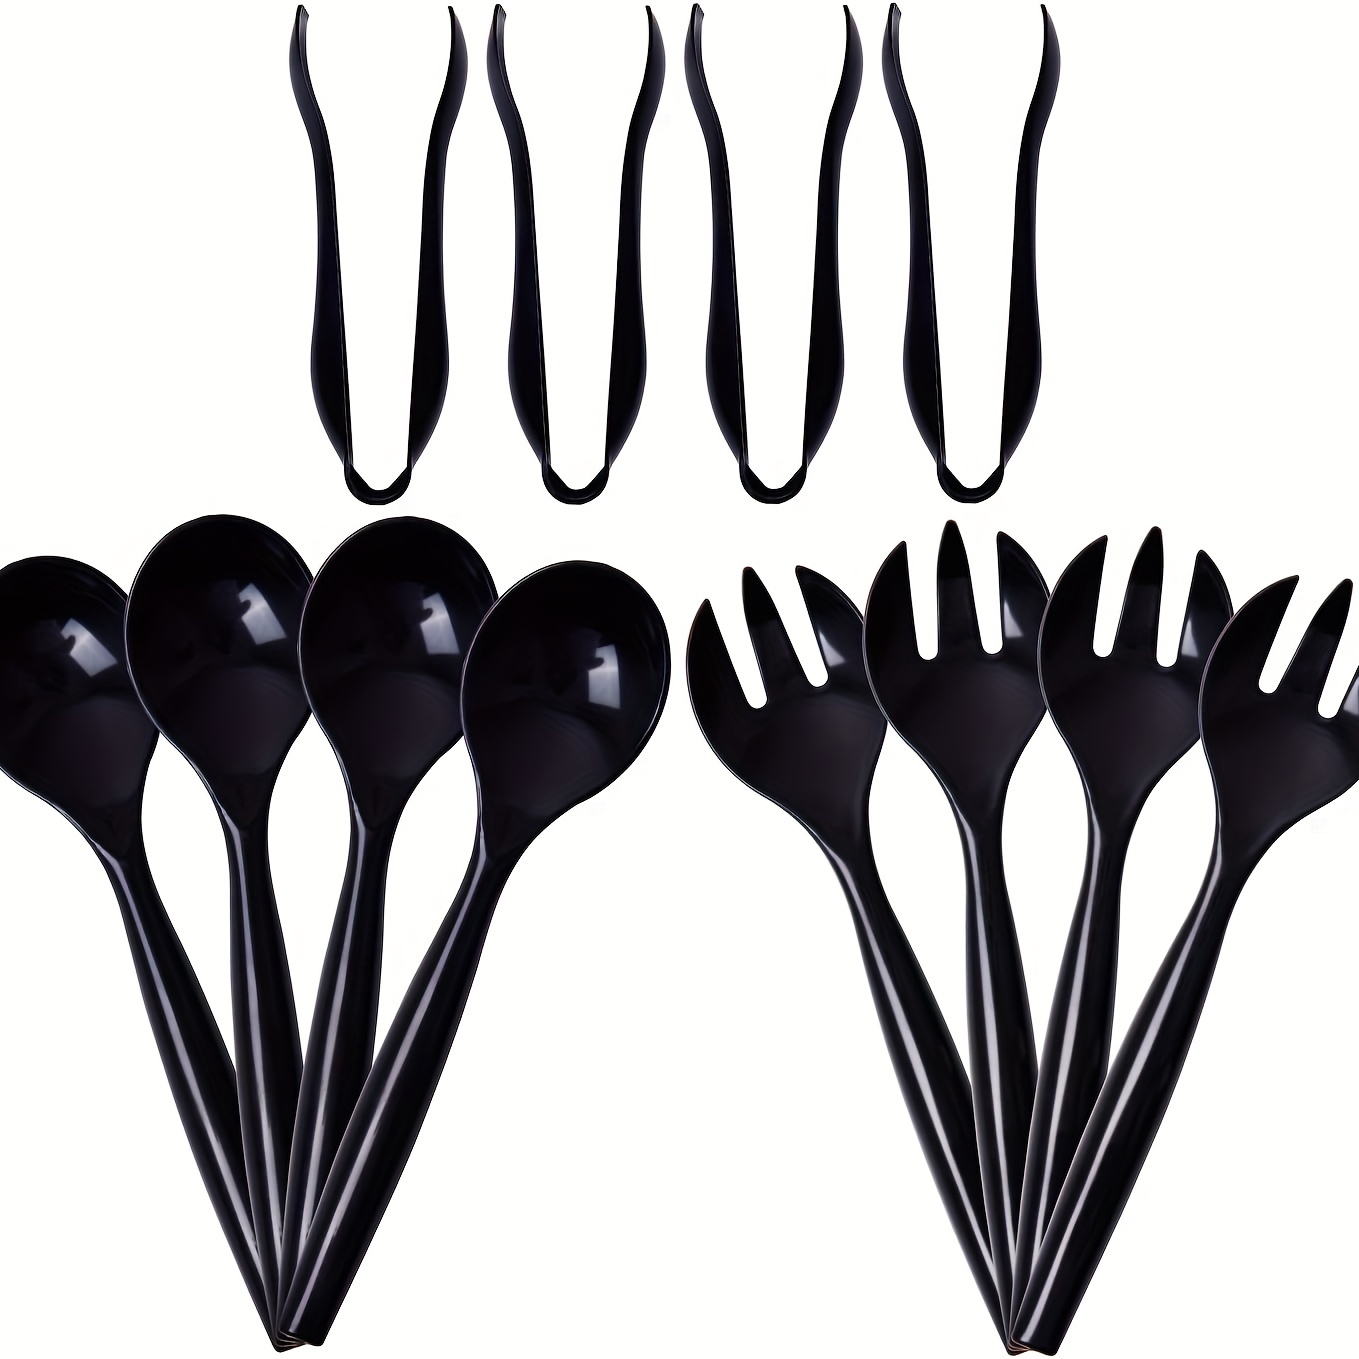 

12pcs Plastic Serving Utensils Set, Heavy Duty Disposable Serving Tongs Black Disposable Serving Set, 4 Spoons, 4 Forks, 4 Tongs